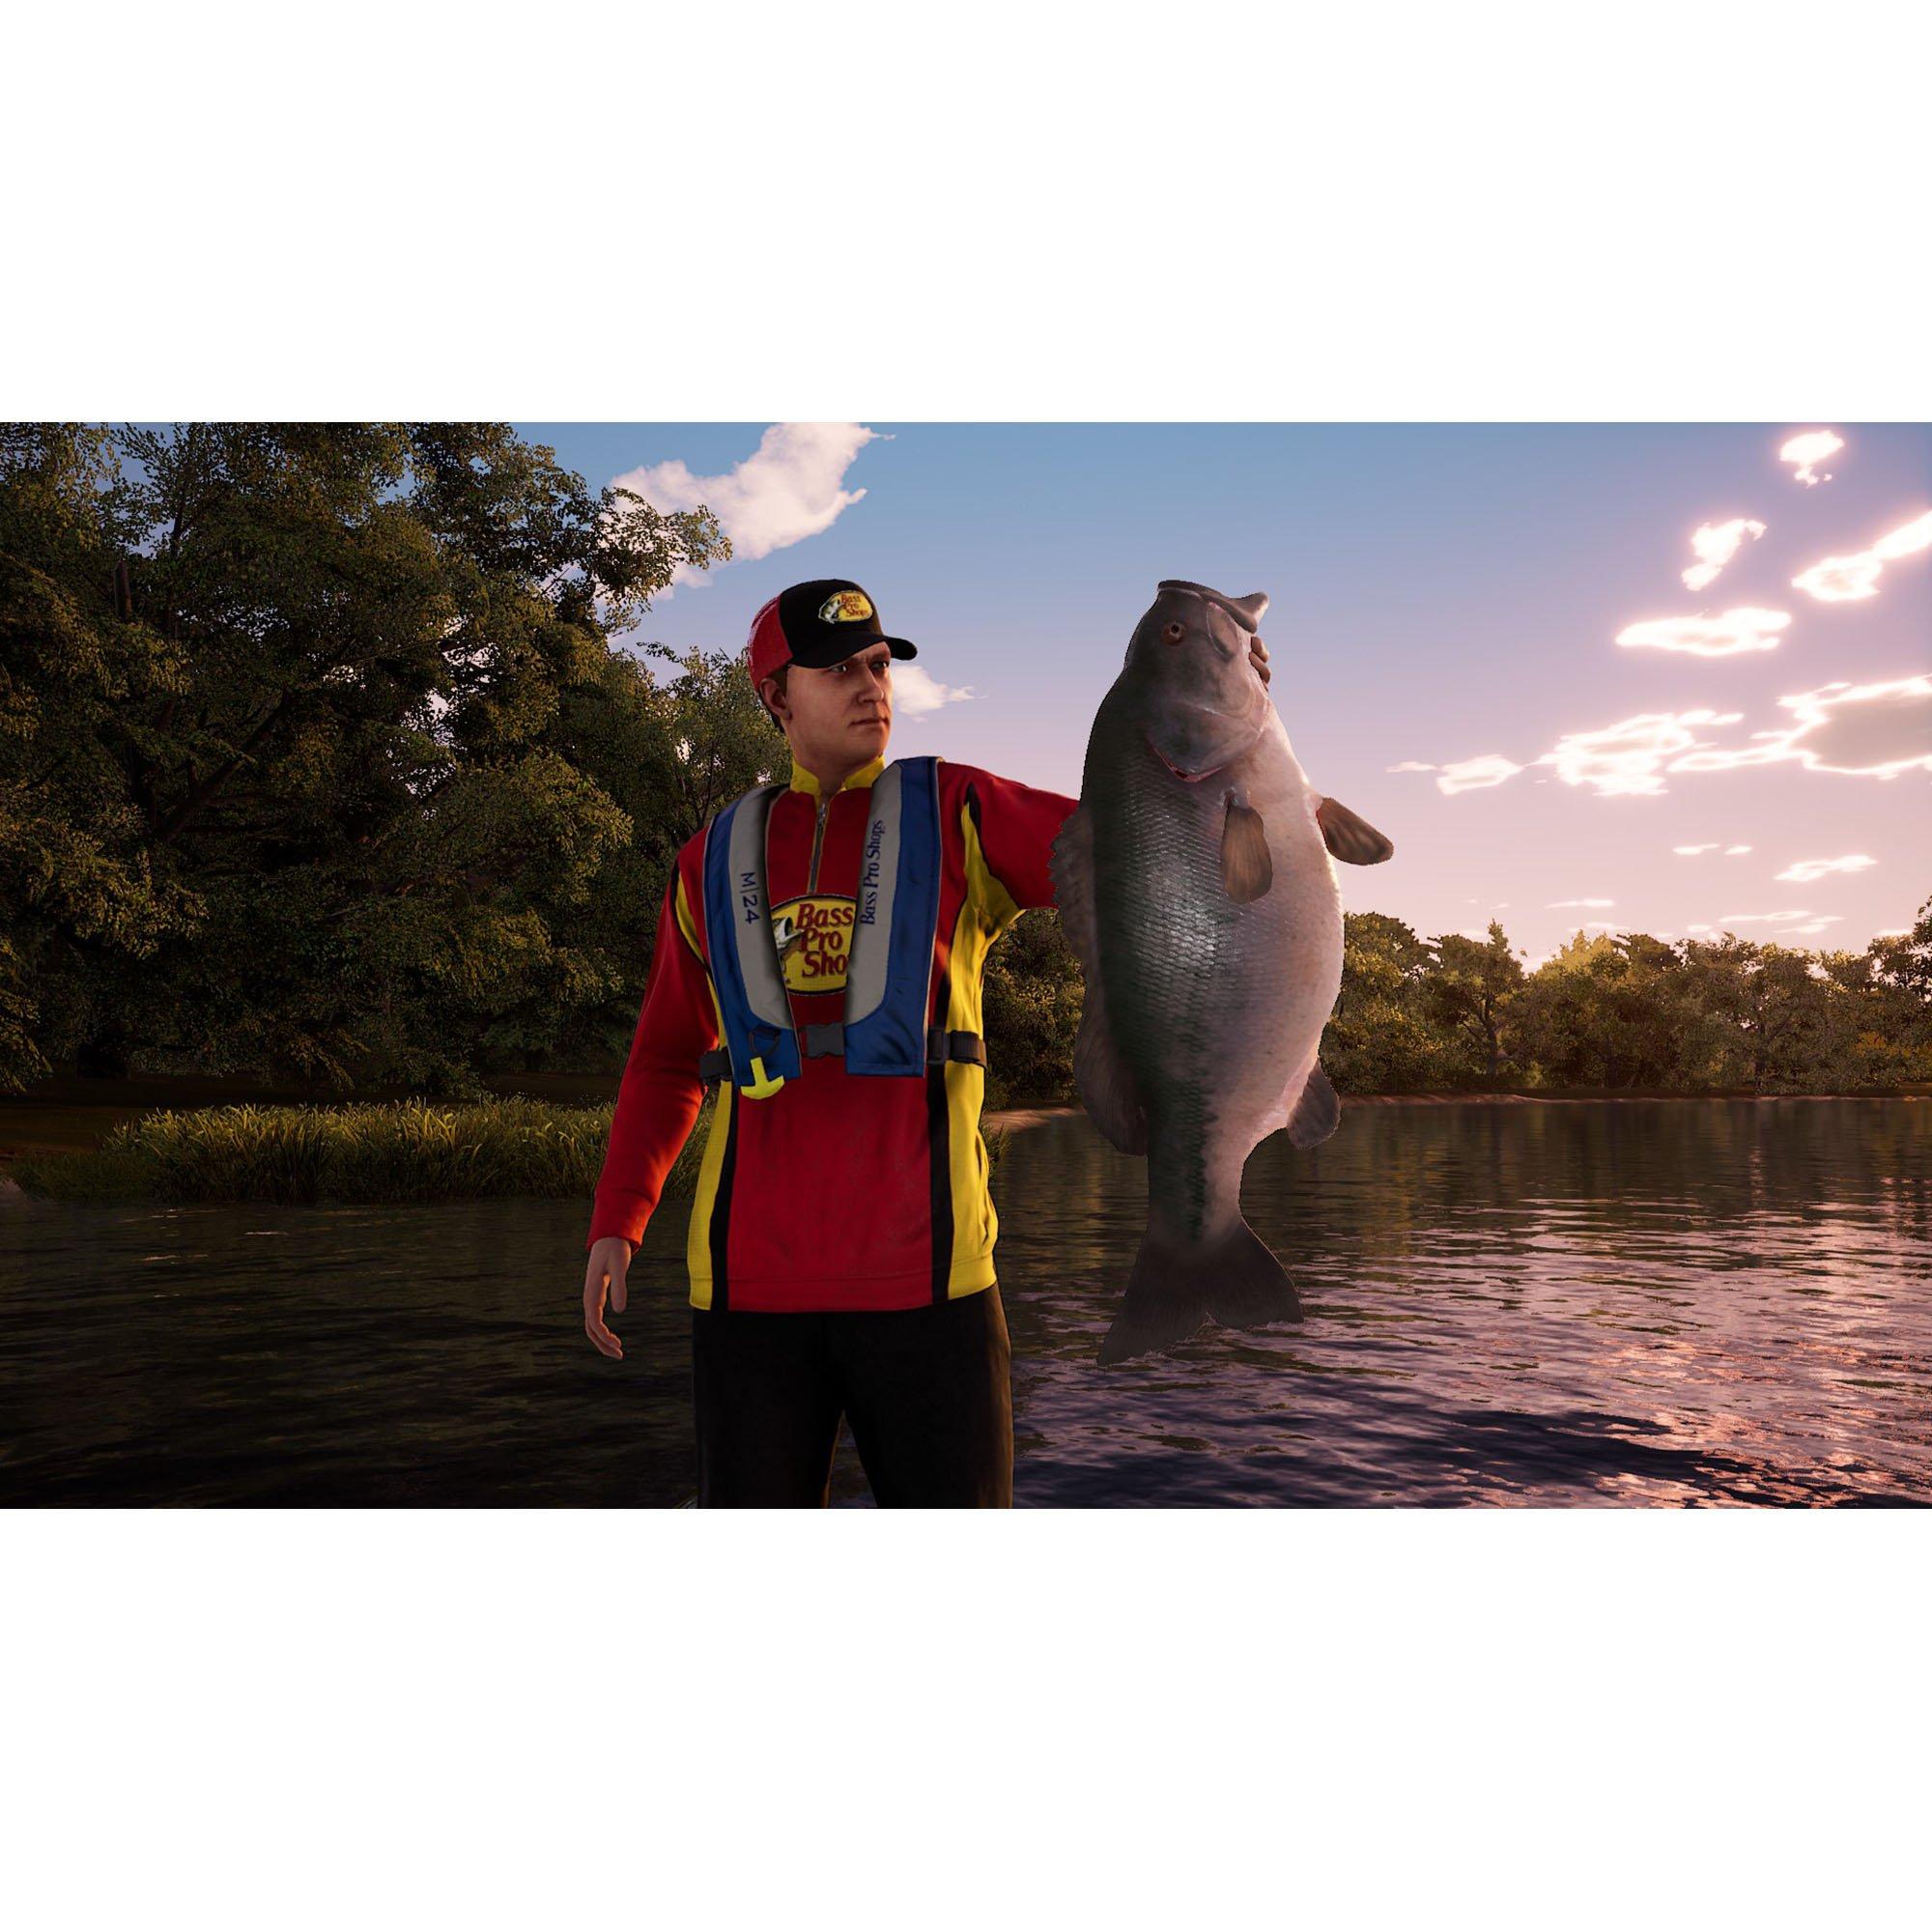 Online Tournament Lake Williams Fishing Sim World Bass Pro Shop Edition 